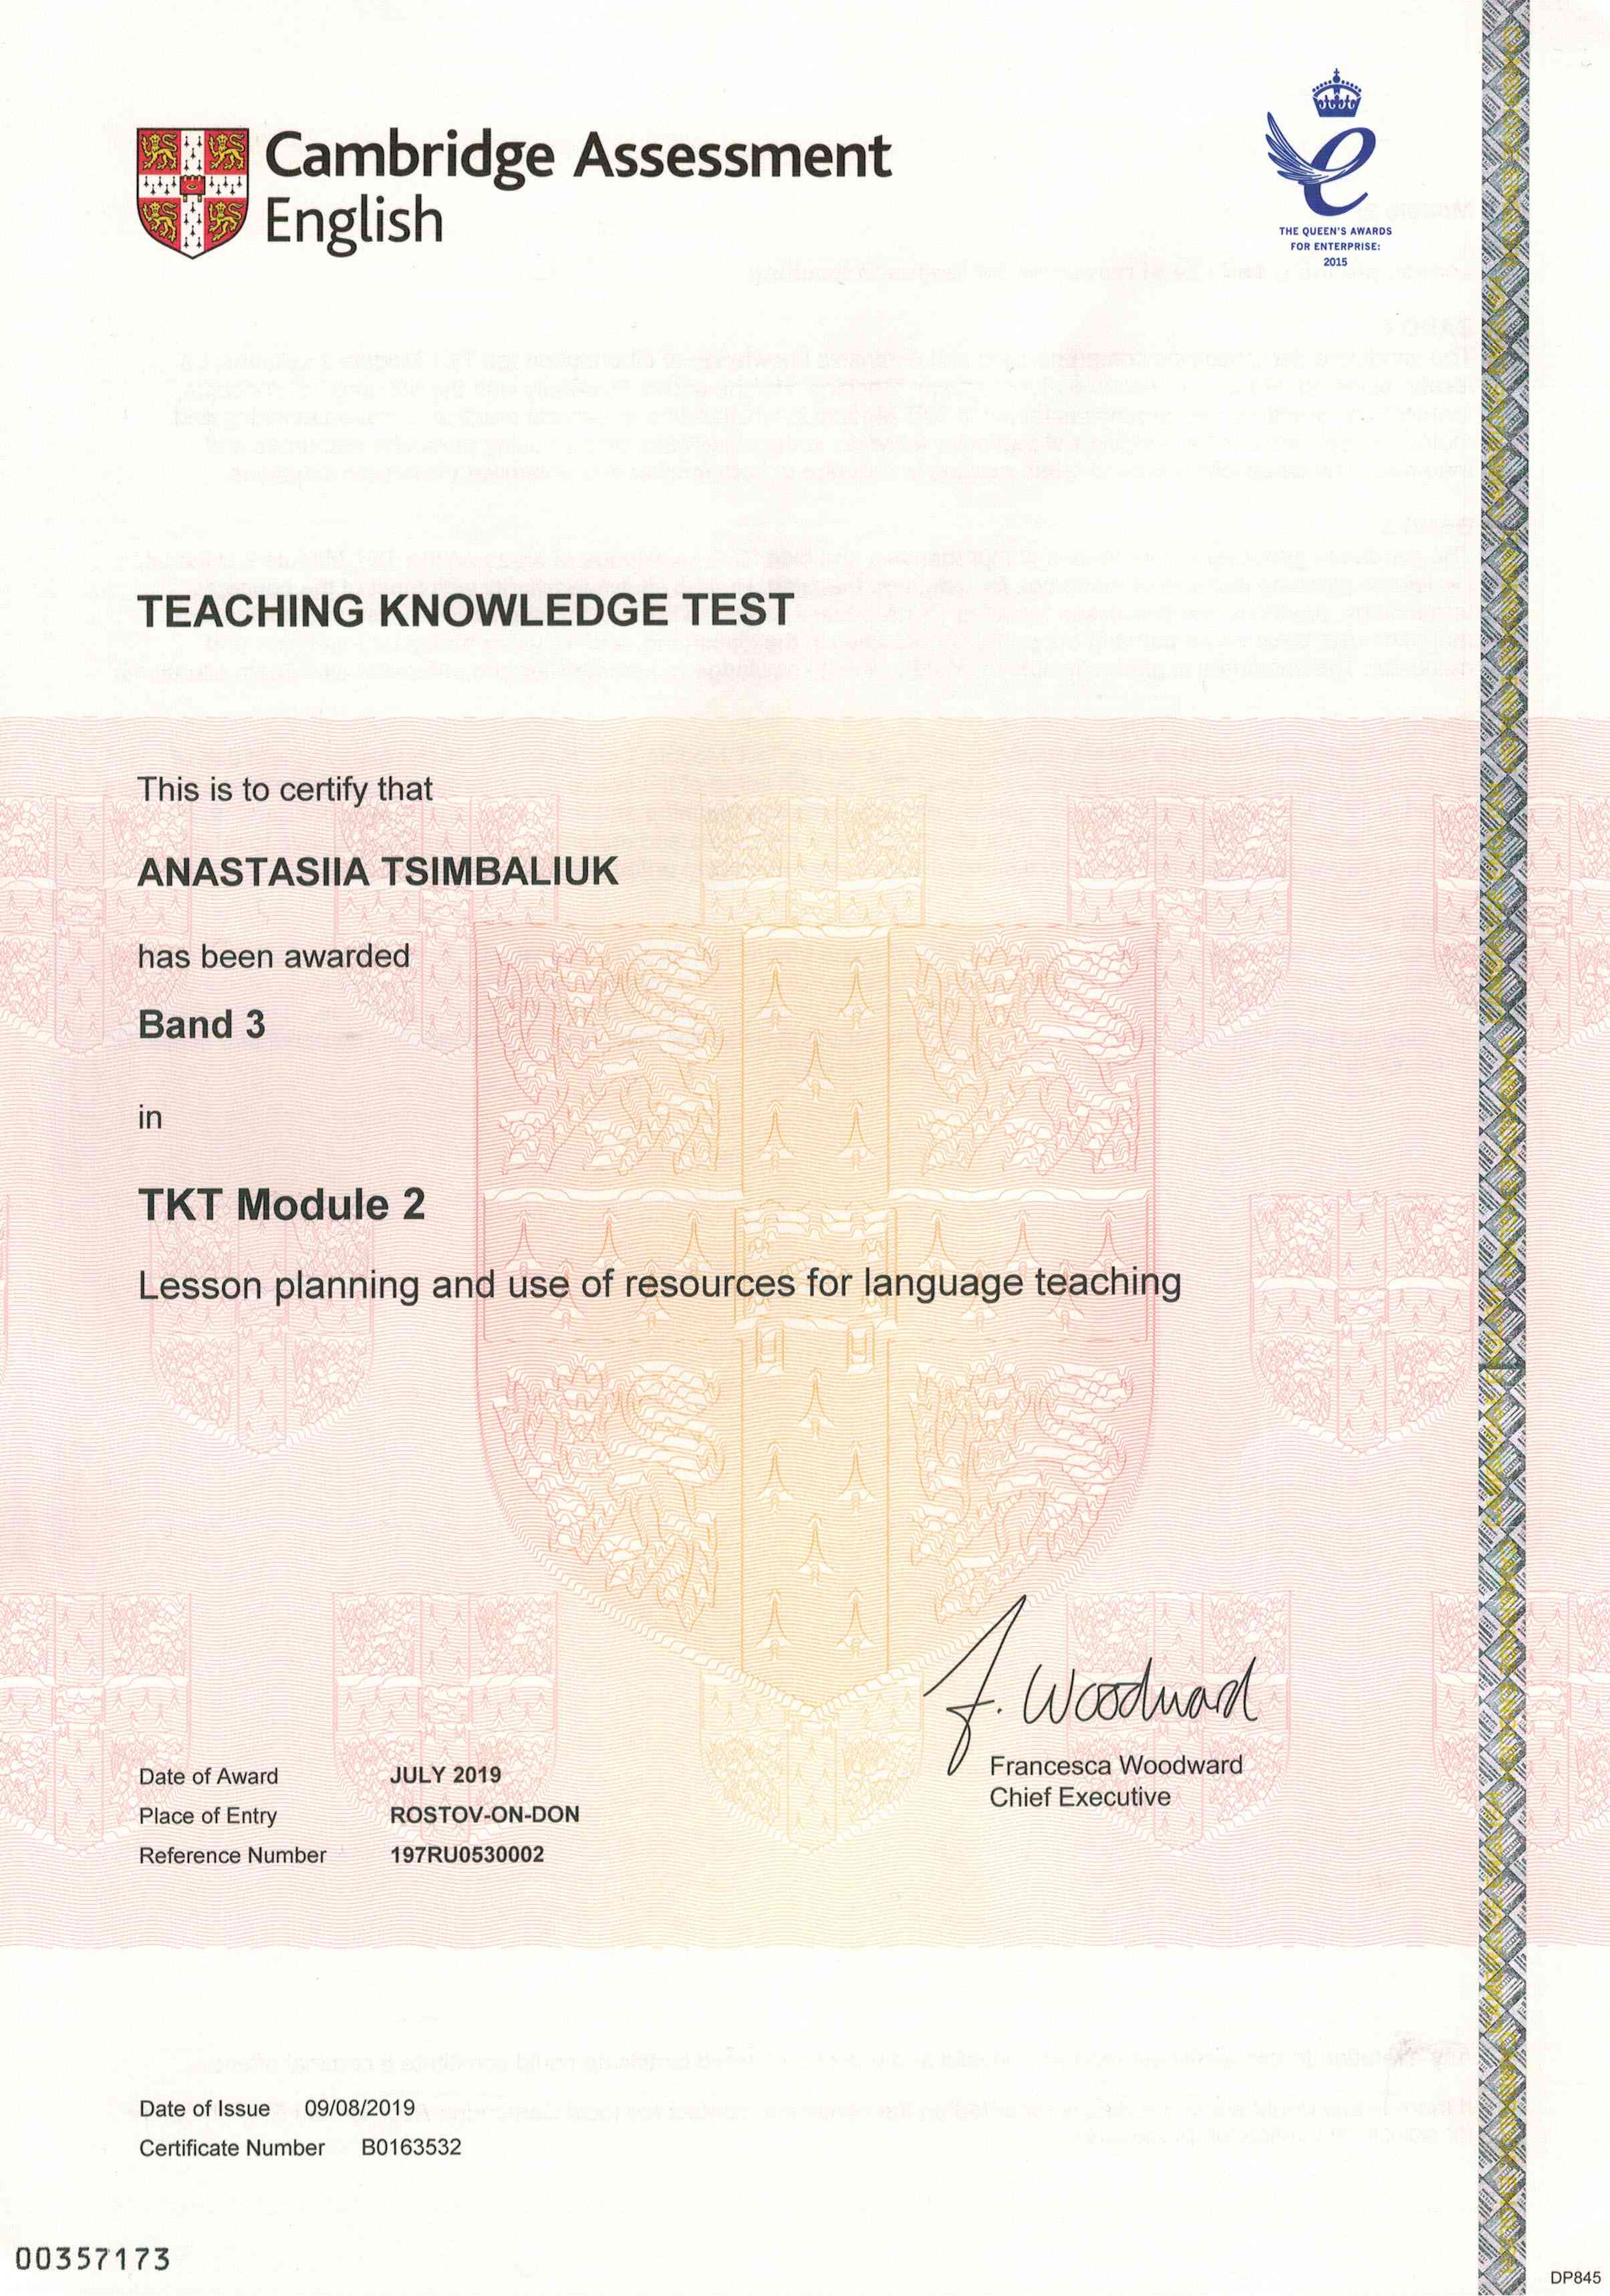 The Teaching Knowledge Test (module 2)